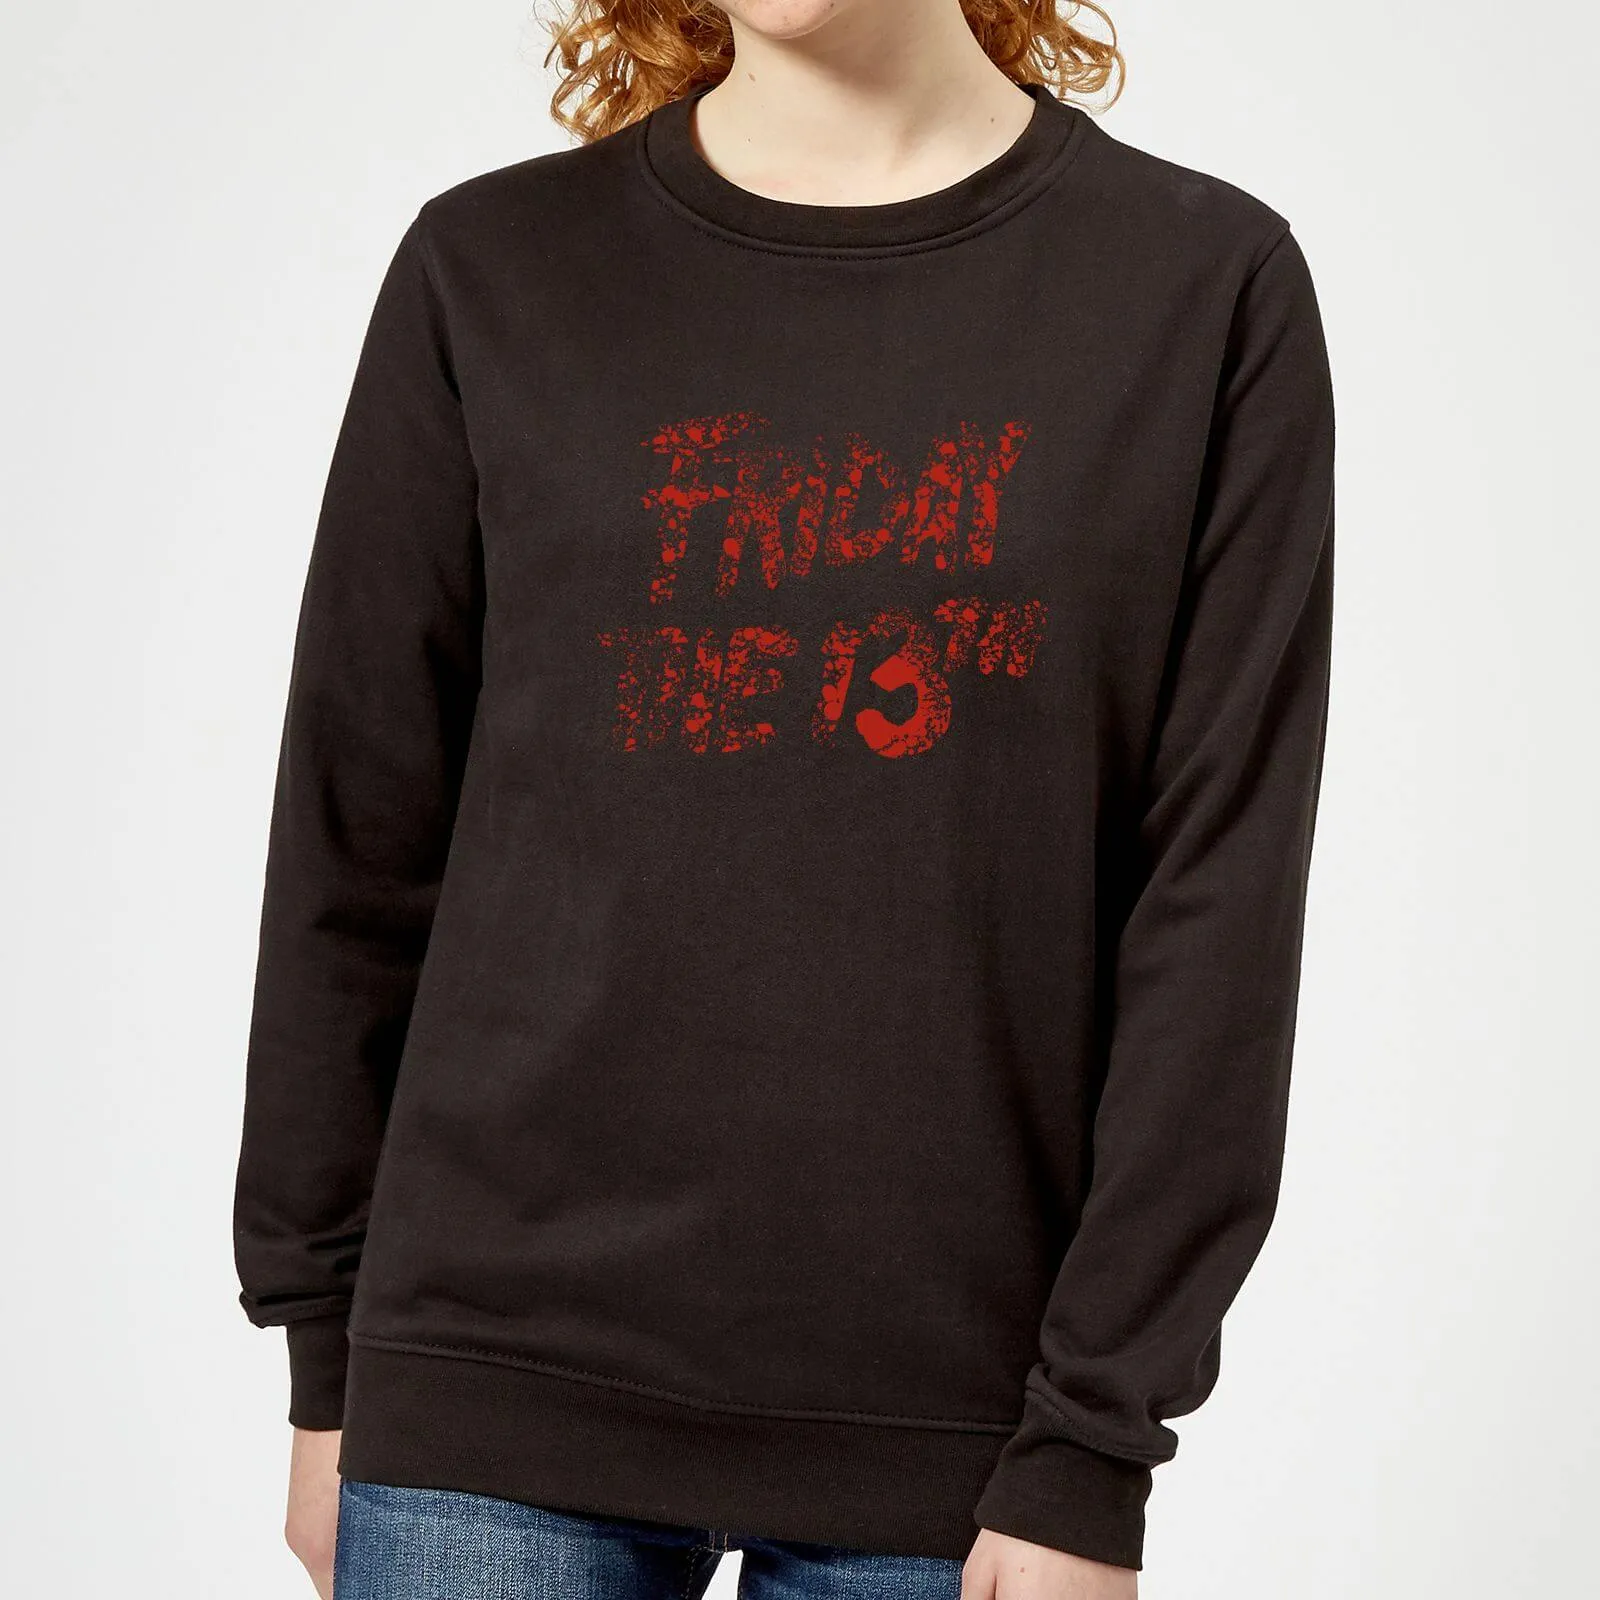 Friday the 13th Logo Blood Women's Sweatshirt - Black - S - Nero